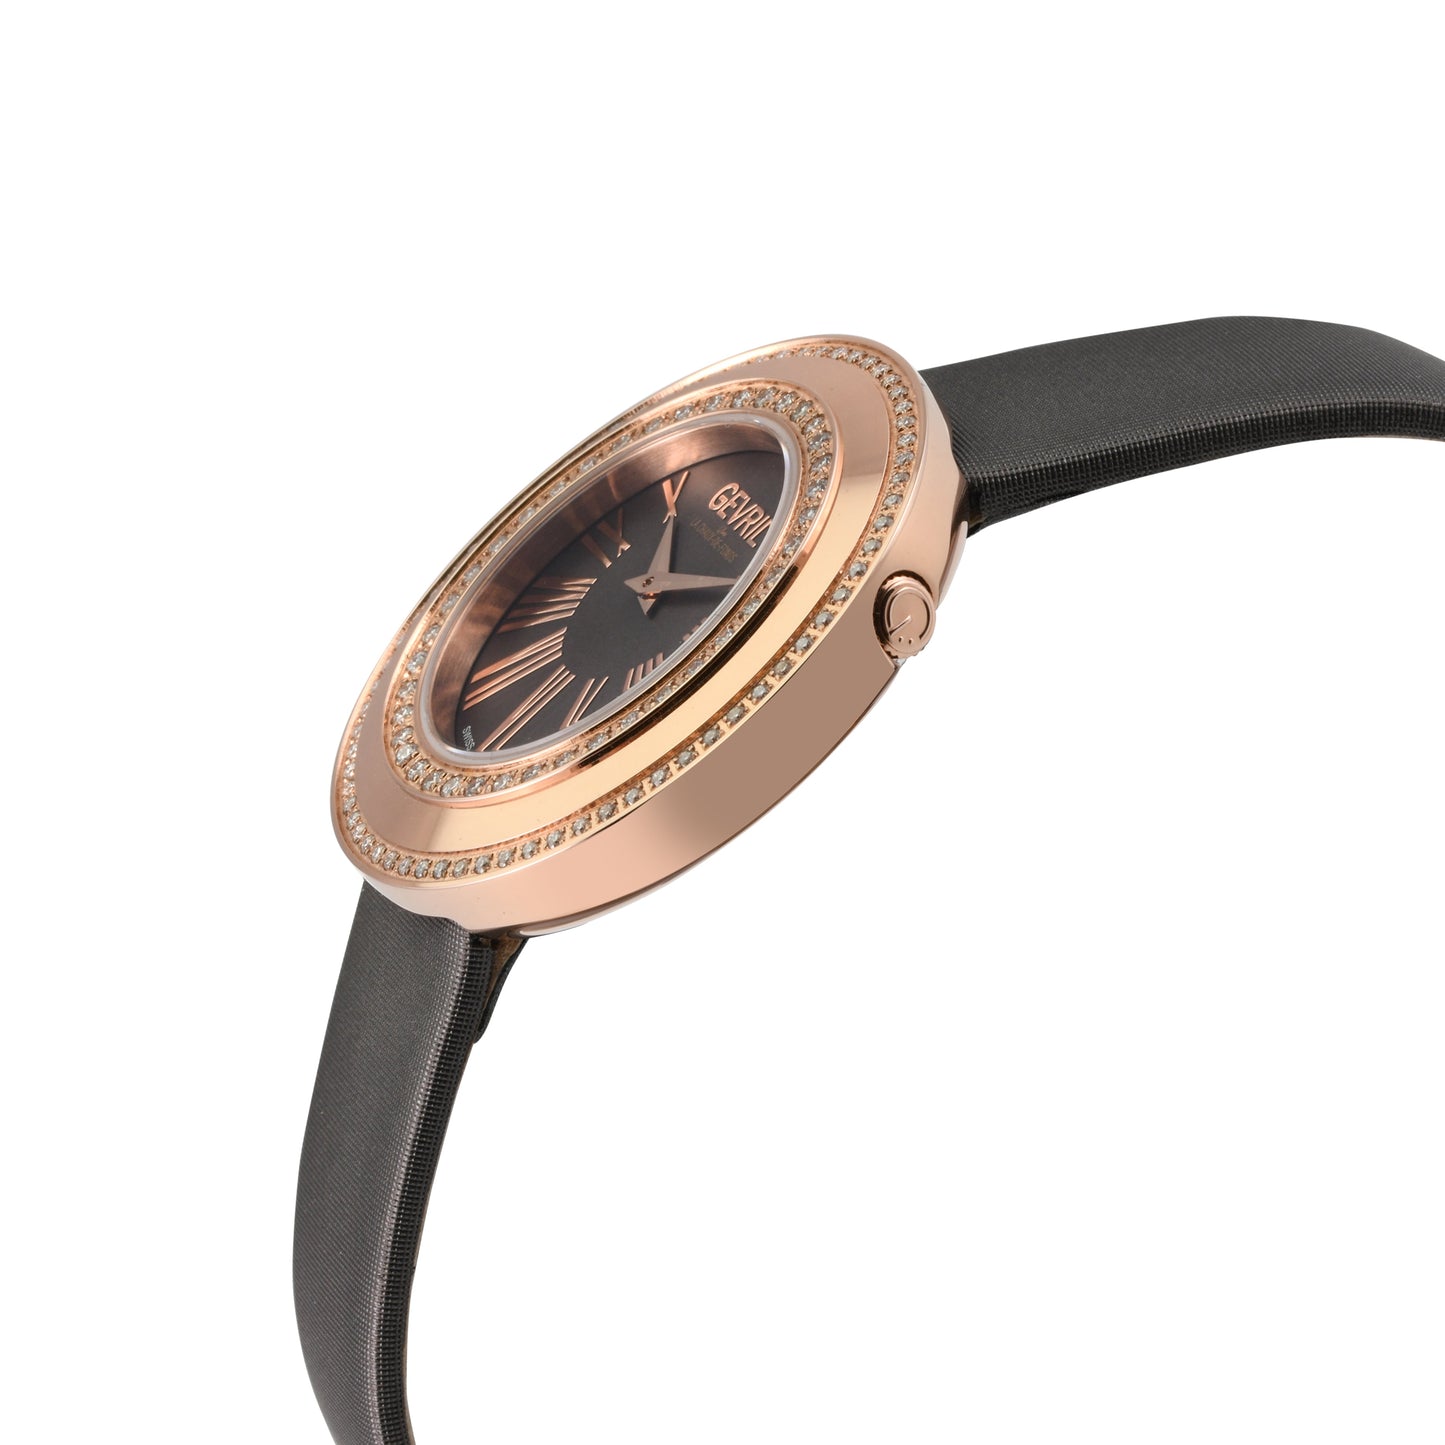 Gevril-Luxury-Swiss-Watches-Gevril Gandria Diamond-12252